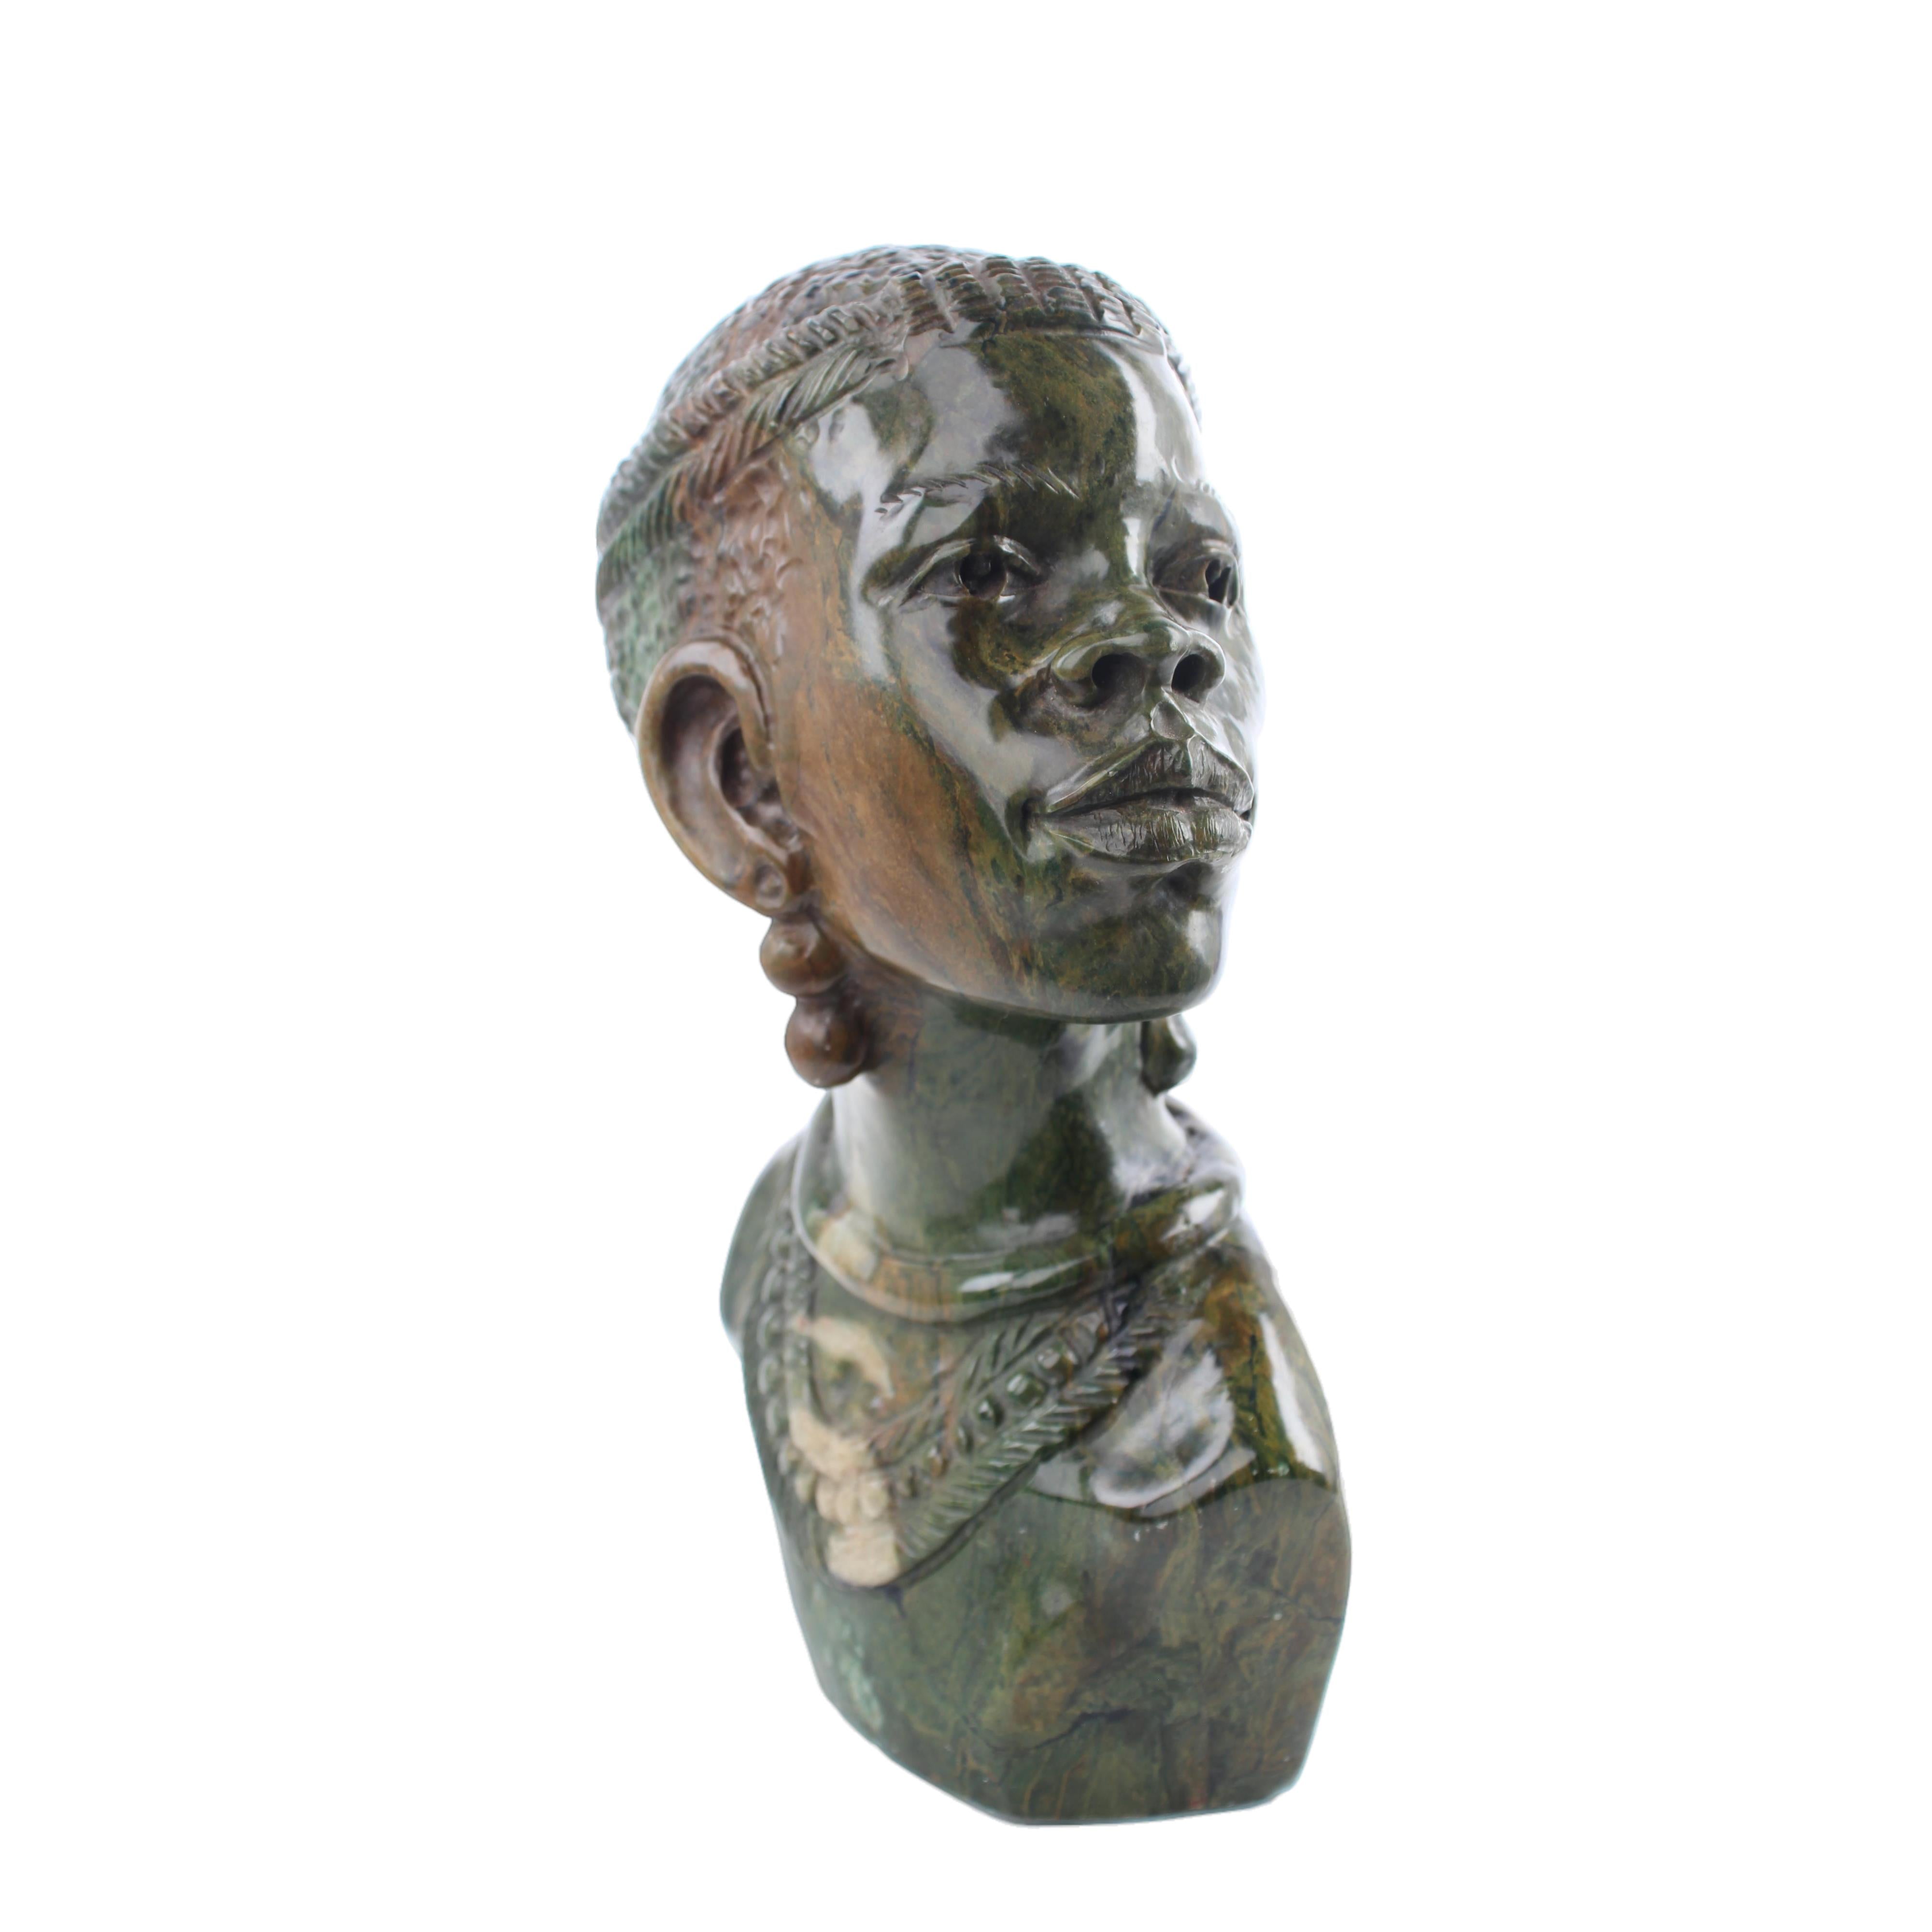 Shona Tribe Verdite Stone Busts ~10.6" Tall - Busts